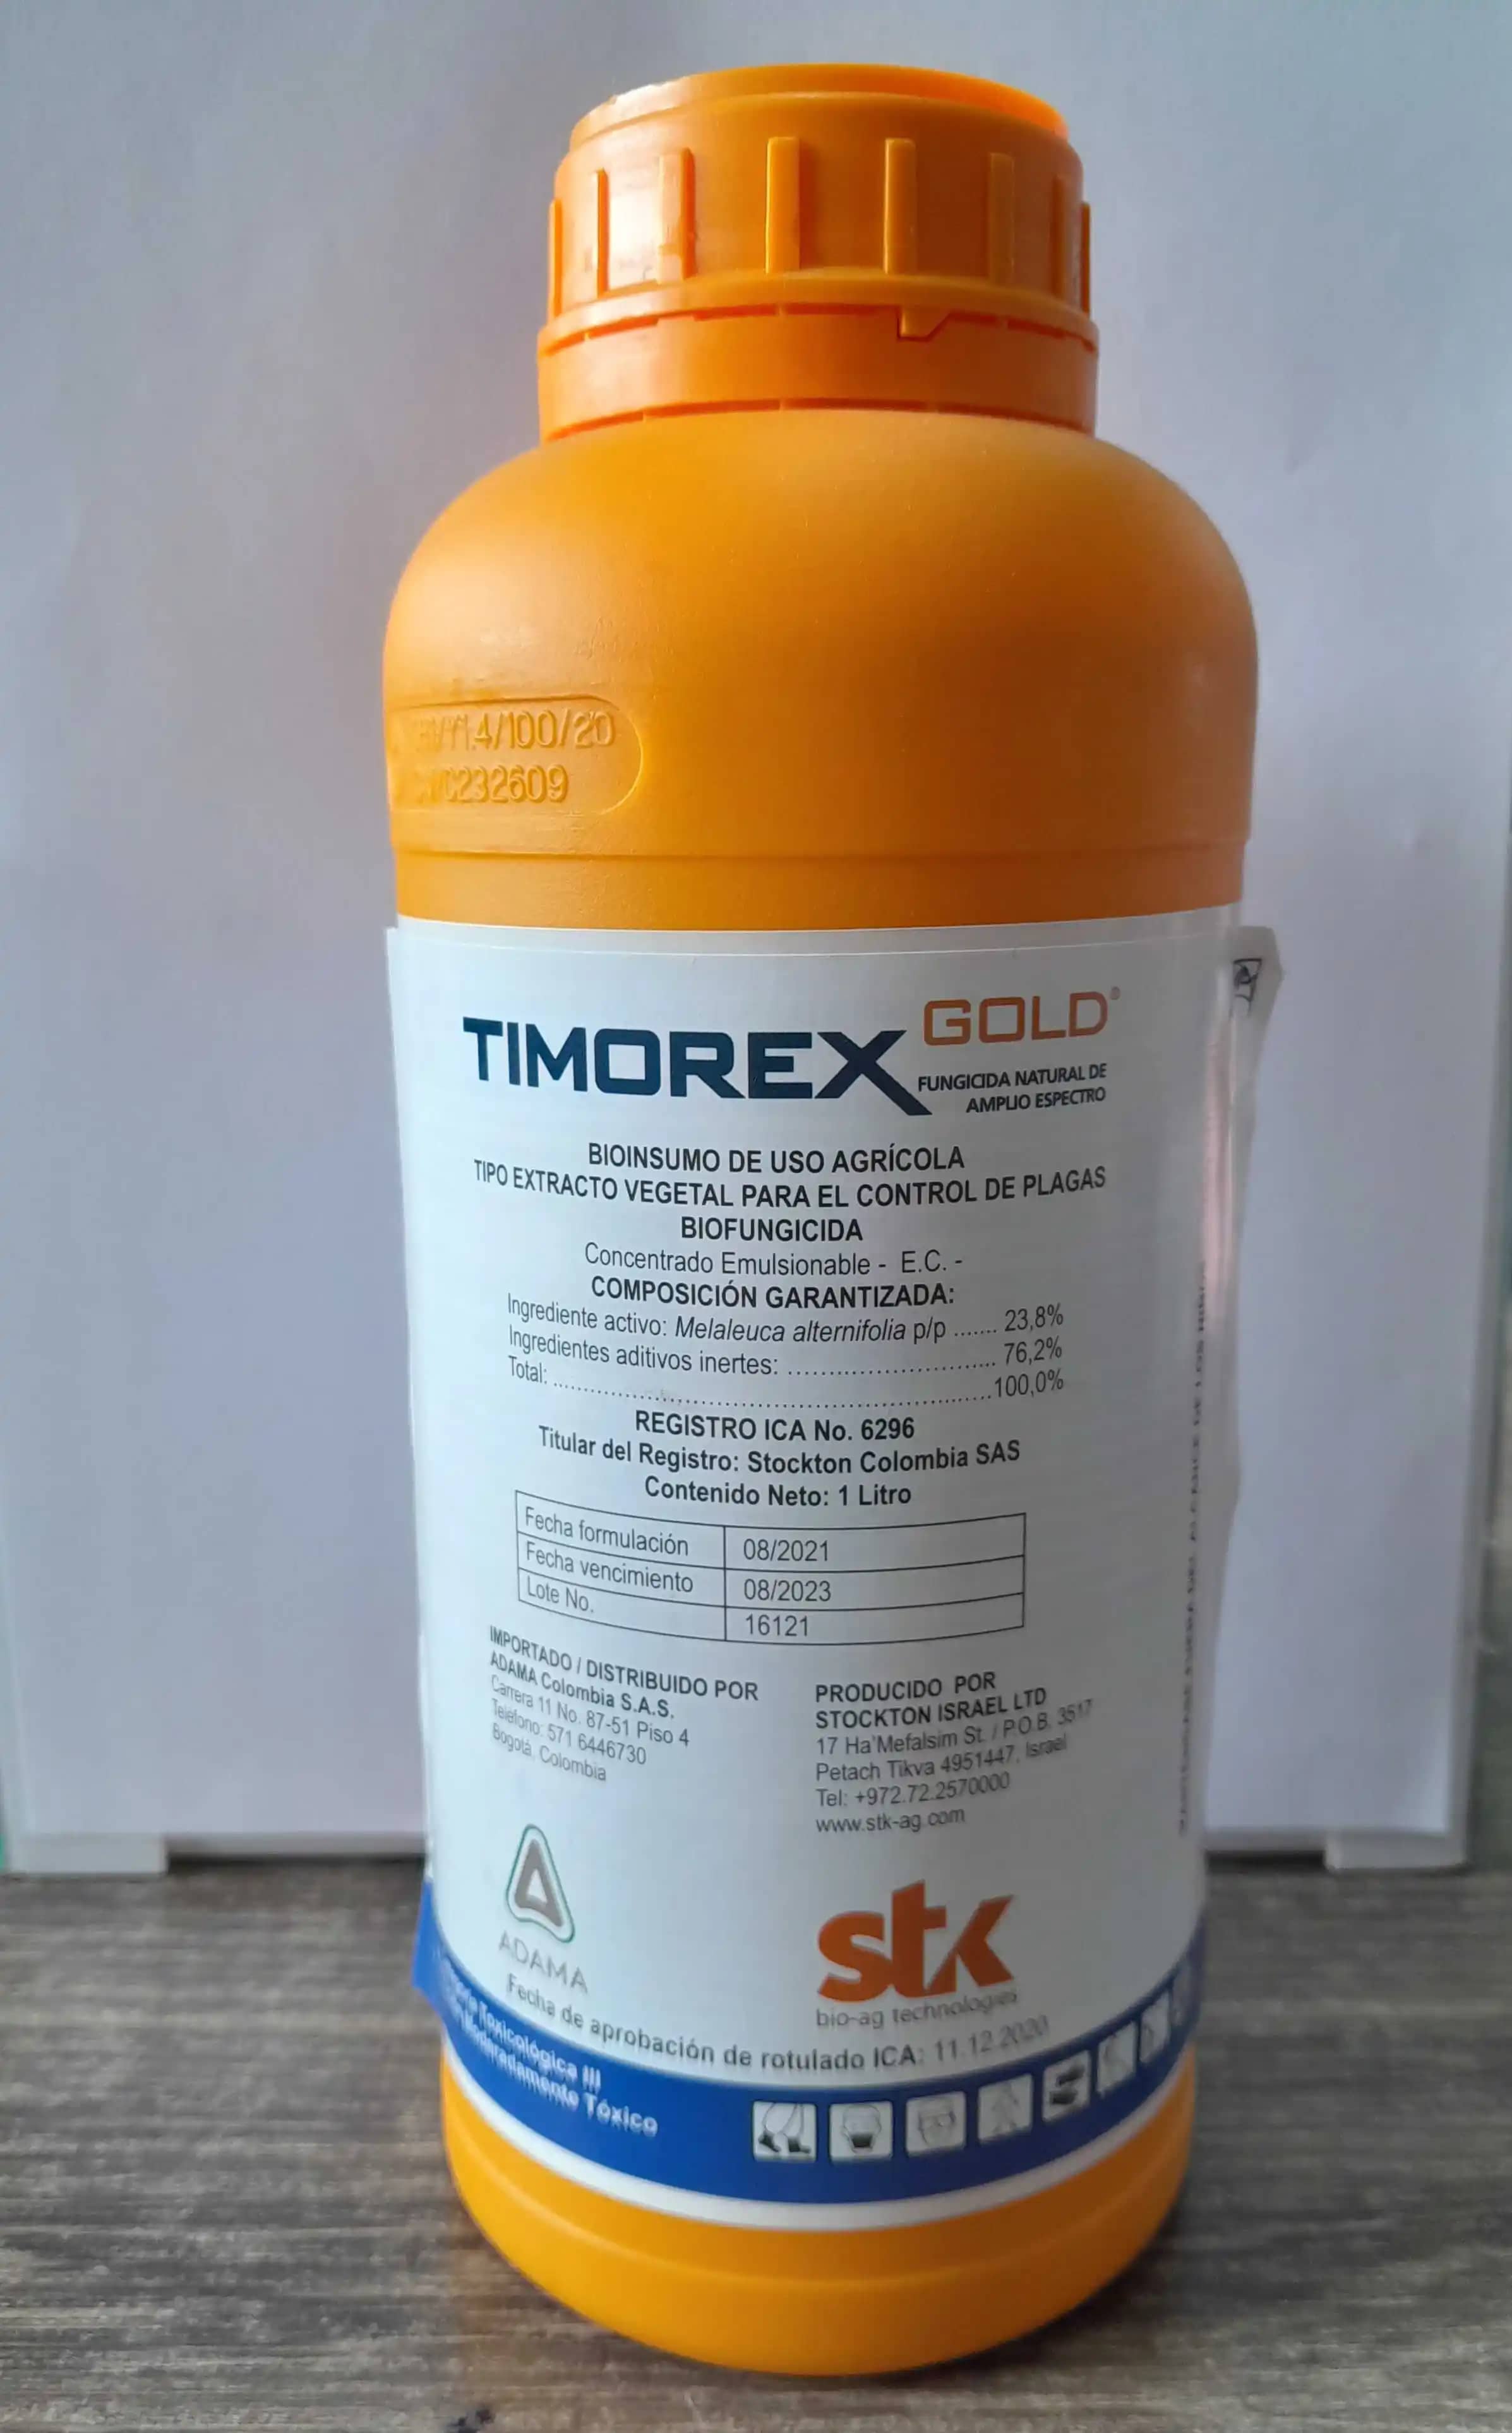 TIMOREX GOLD® - Fungicida Natural x 1 Litro